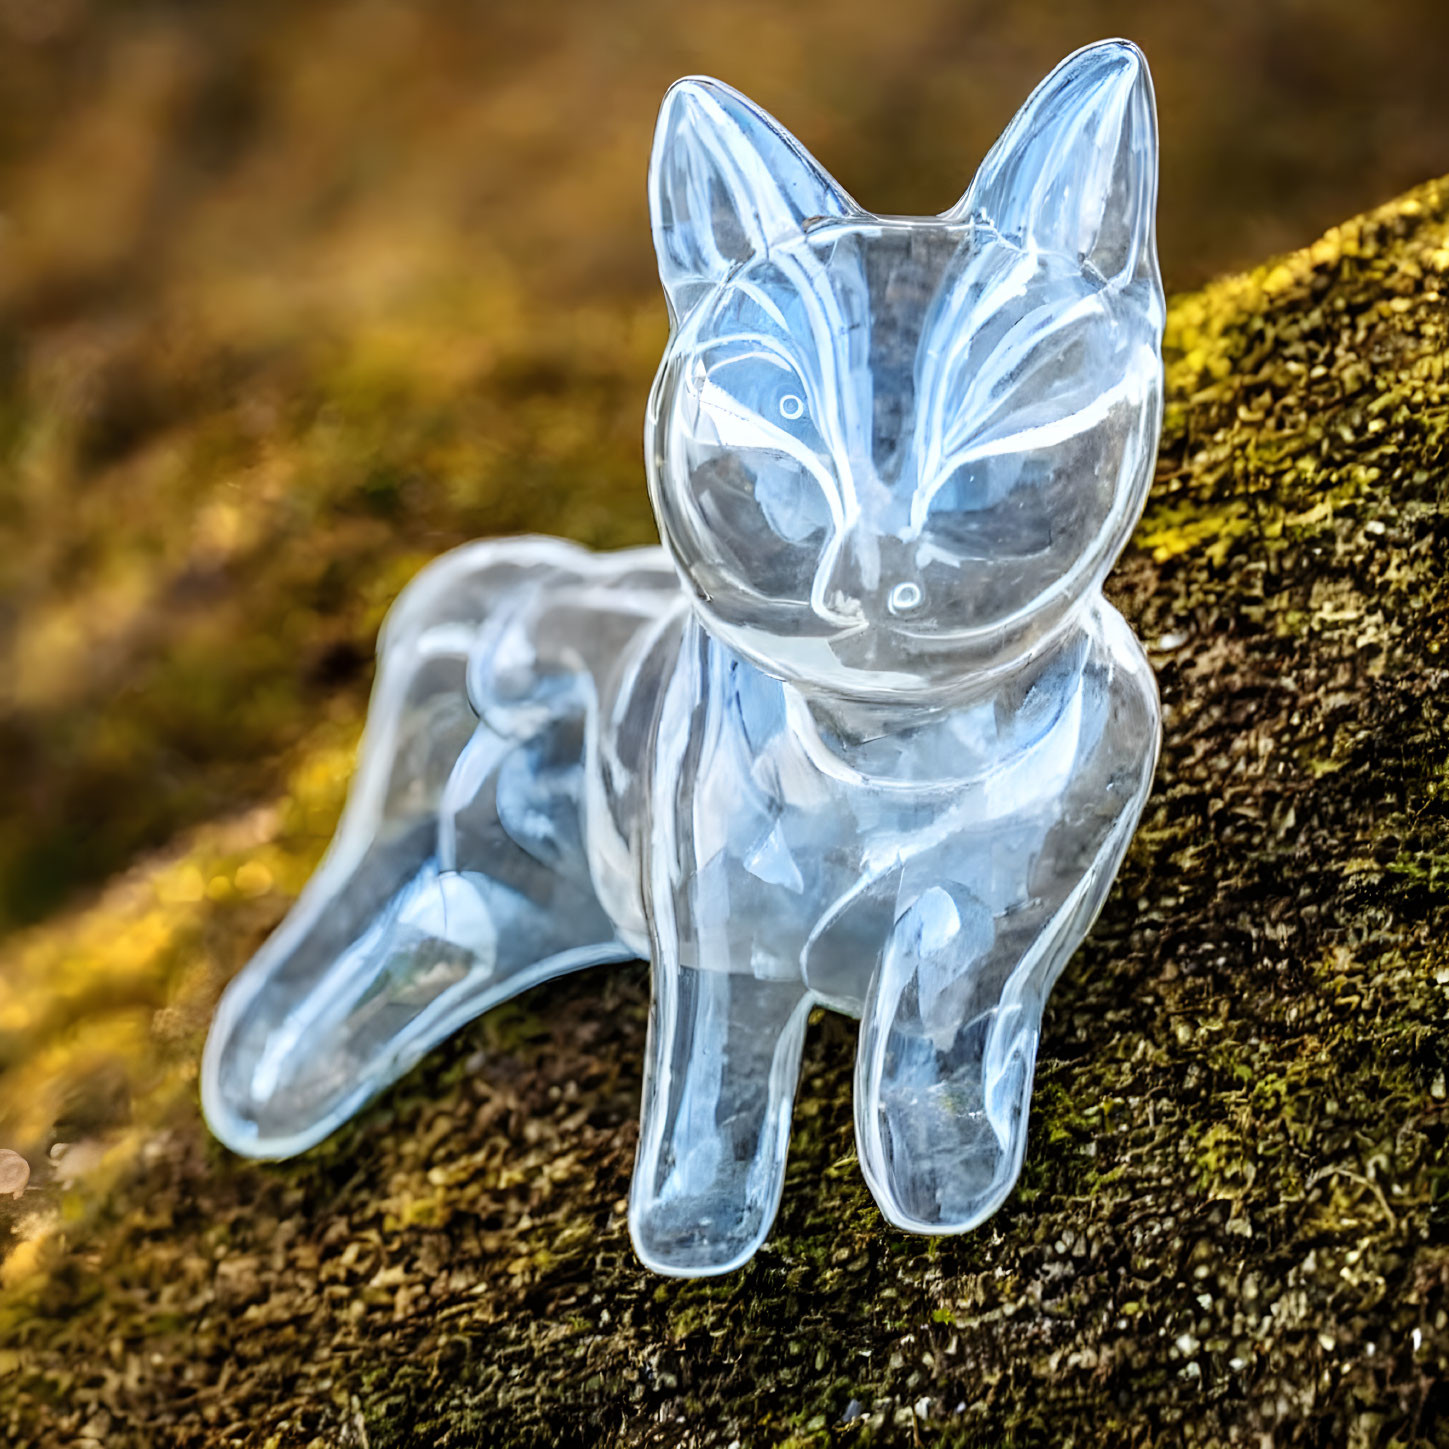 Translucent glass fox figurine on moss under sunlight